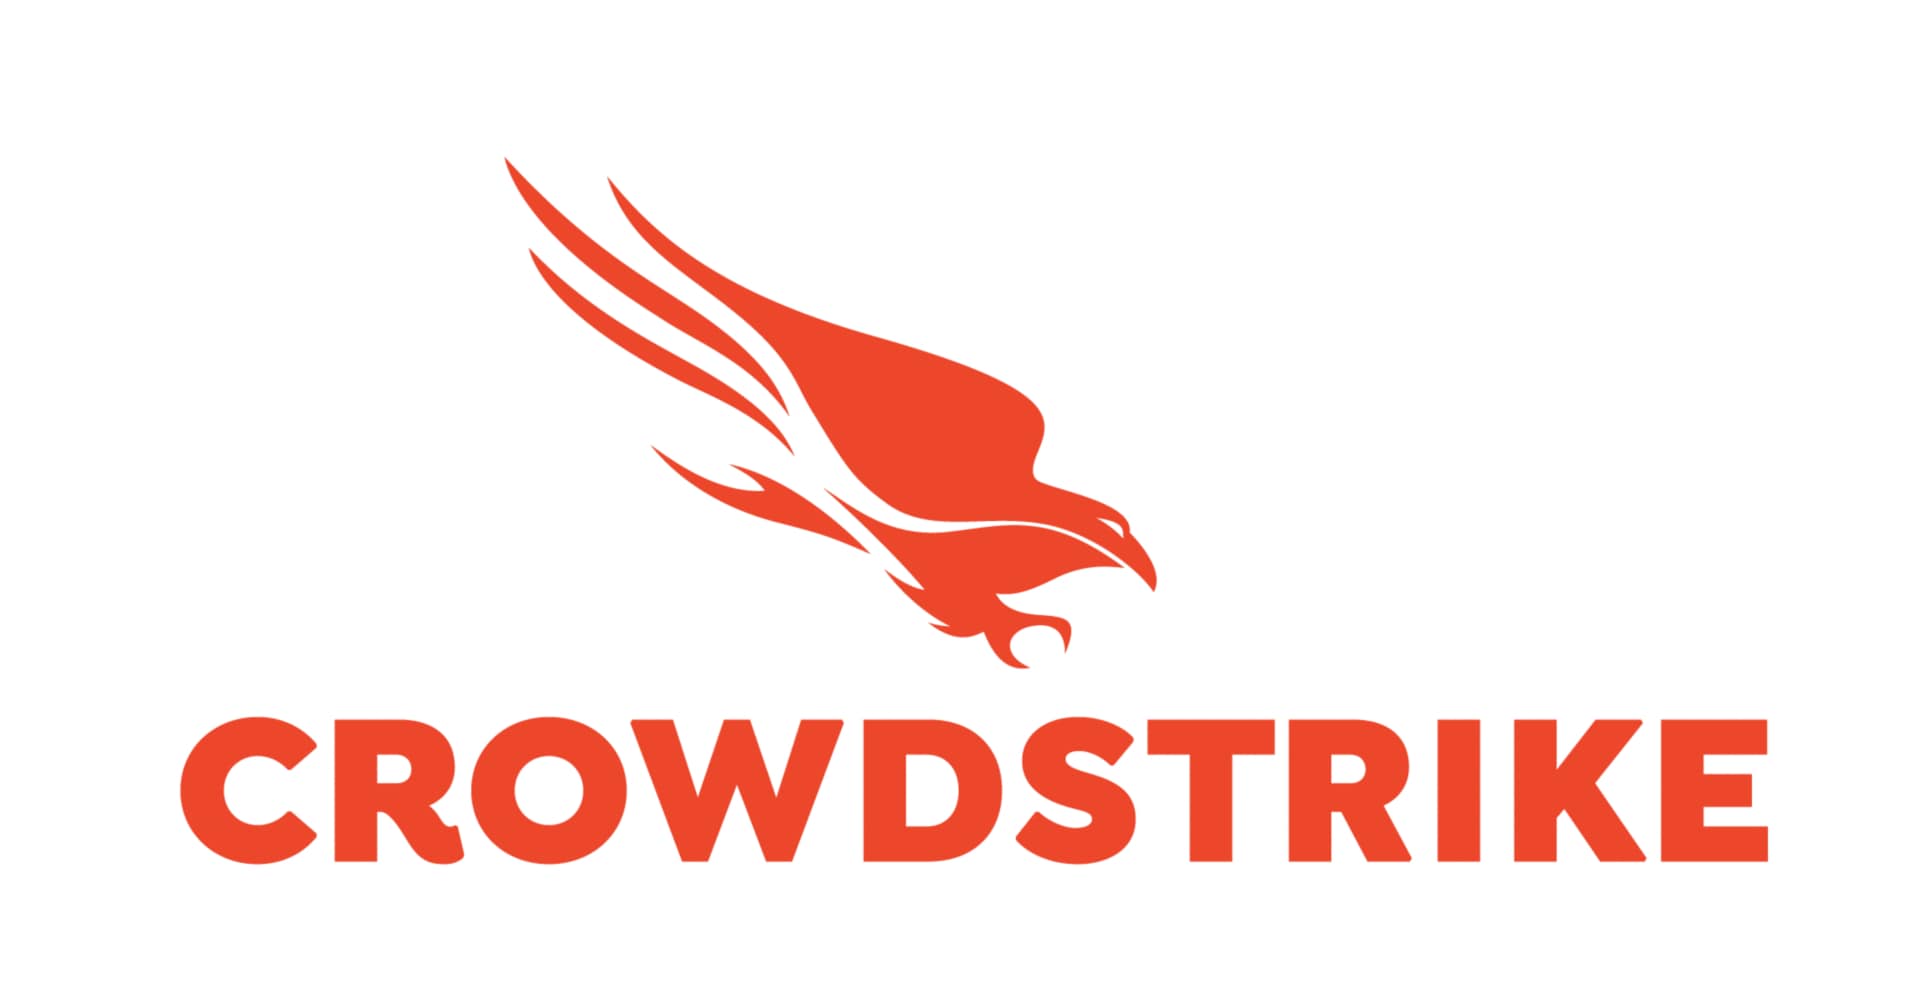 CrowdStrike 6-Month Falcon Firewall Management Bundle Promo Software